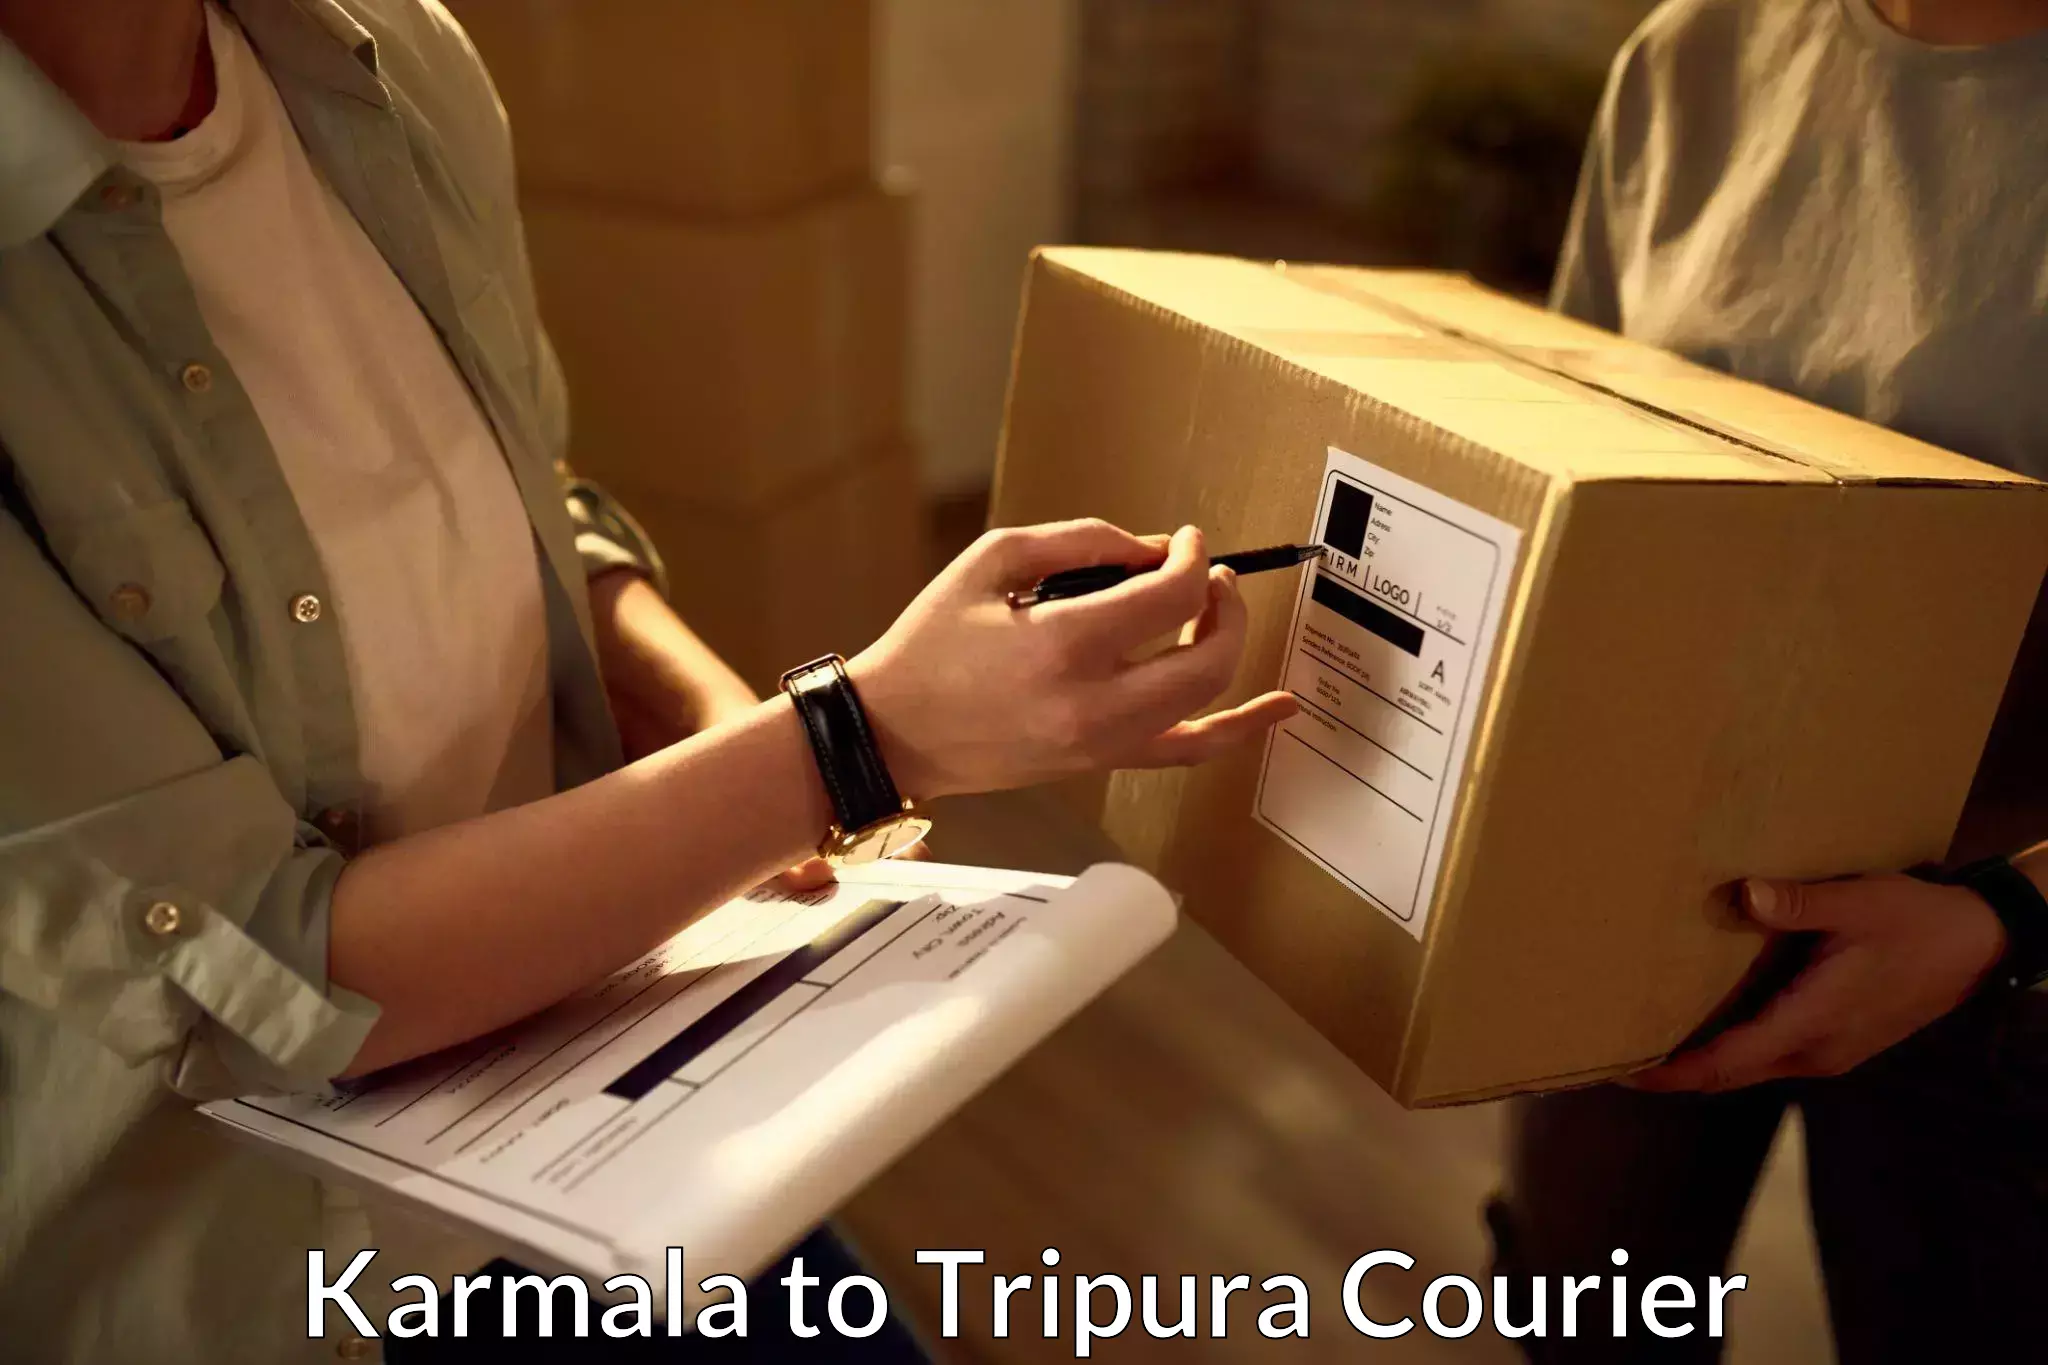 Courier service innovation Karmala to Tripura